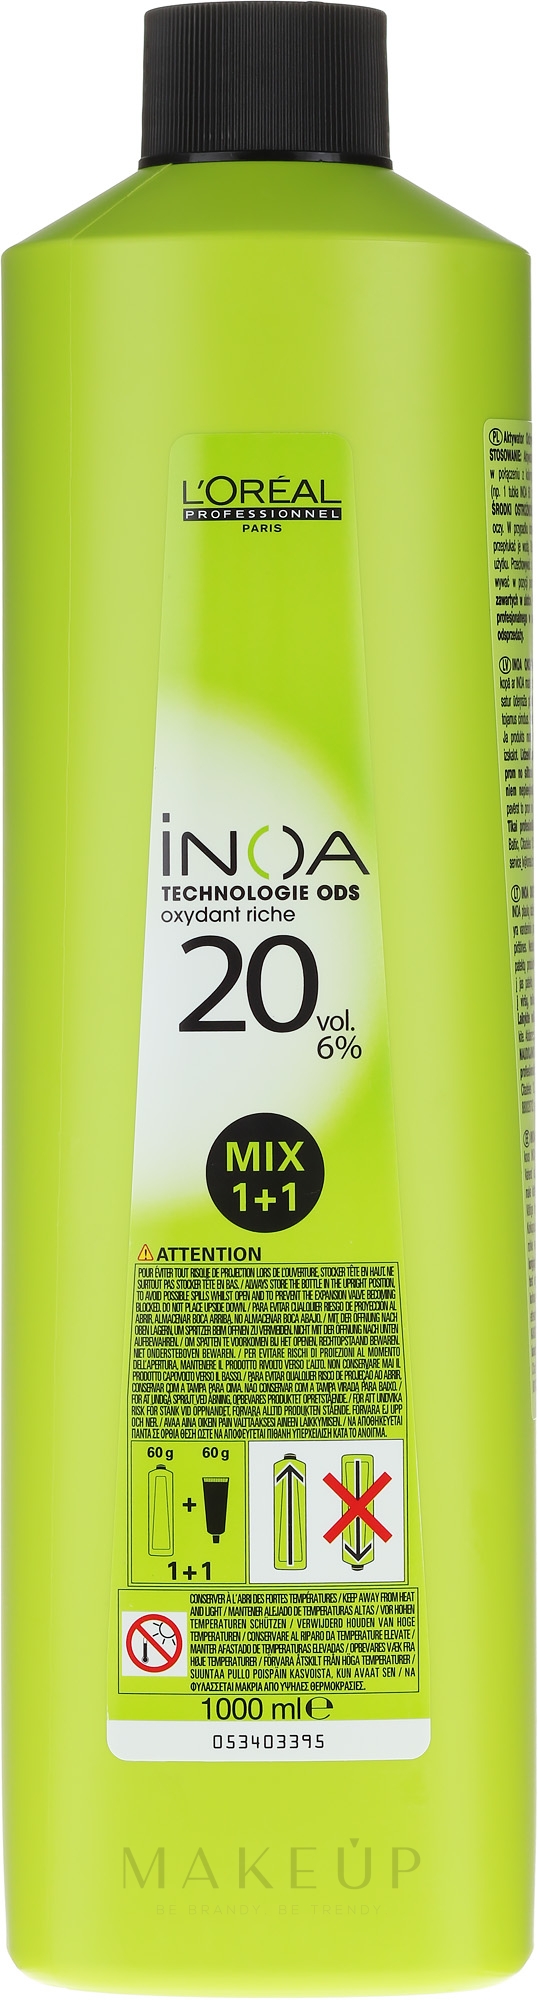 Oxidationsmittel 6% - L'oreal Professionnel Inoa Oxydant 6% 20 vol. Mix 1+1 — Bild 1000 ml